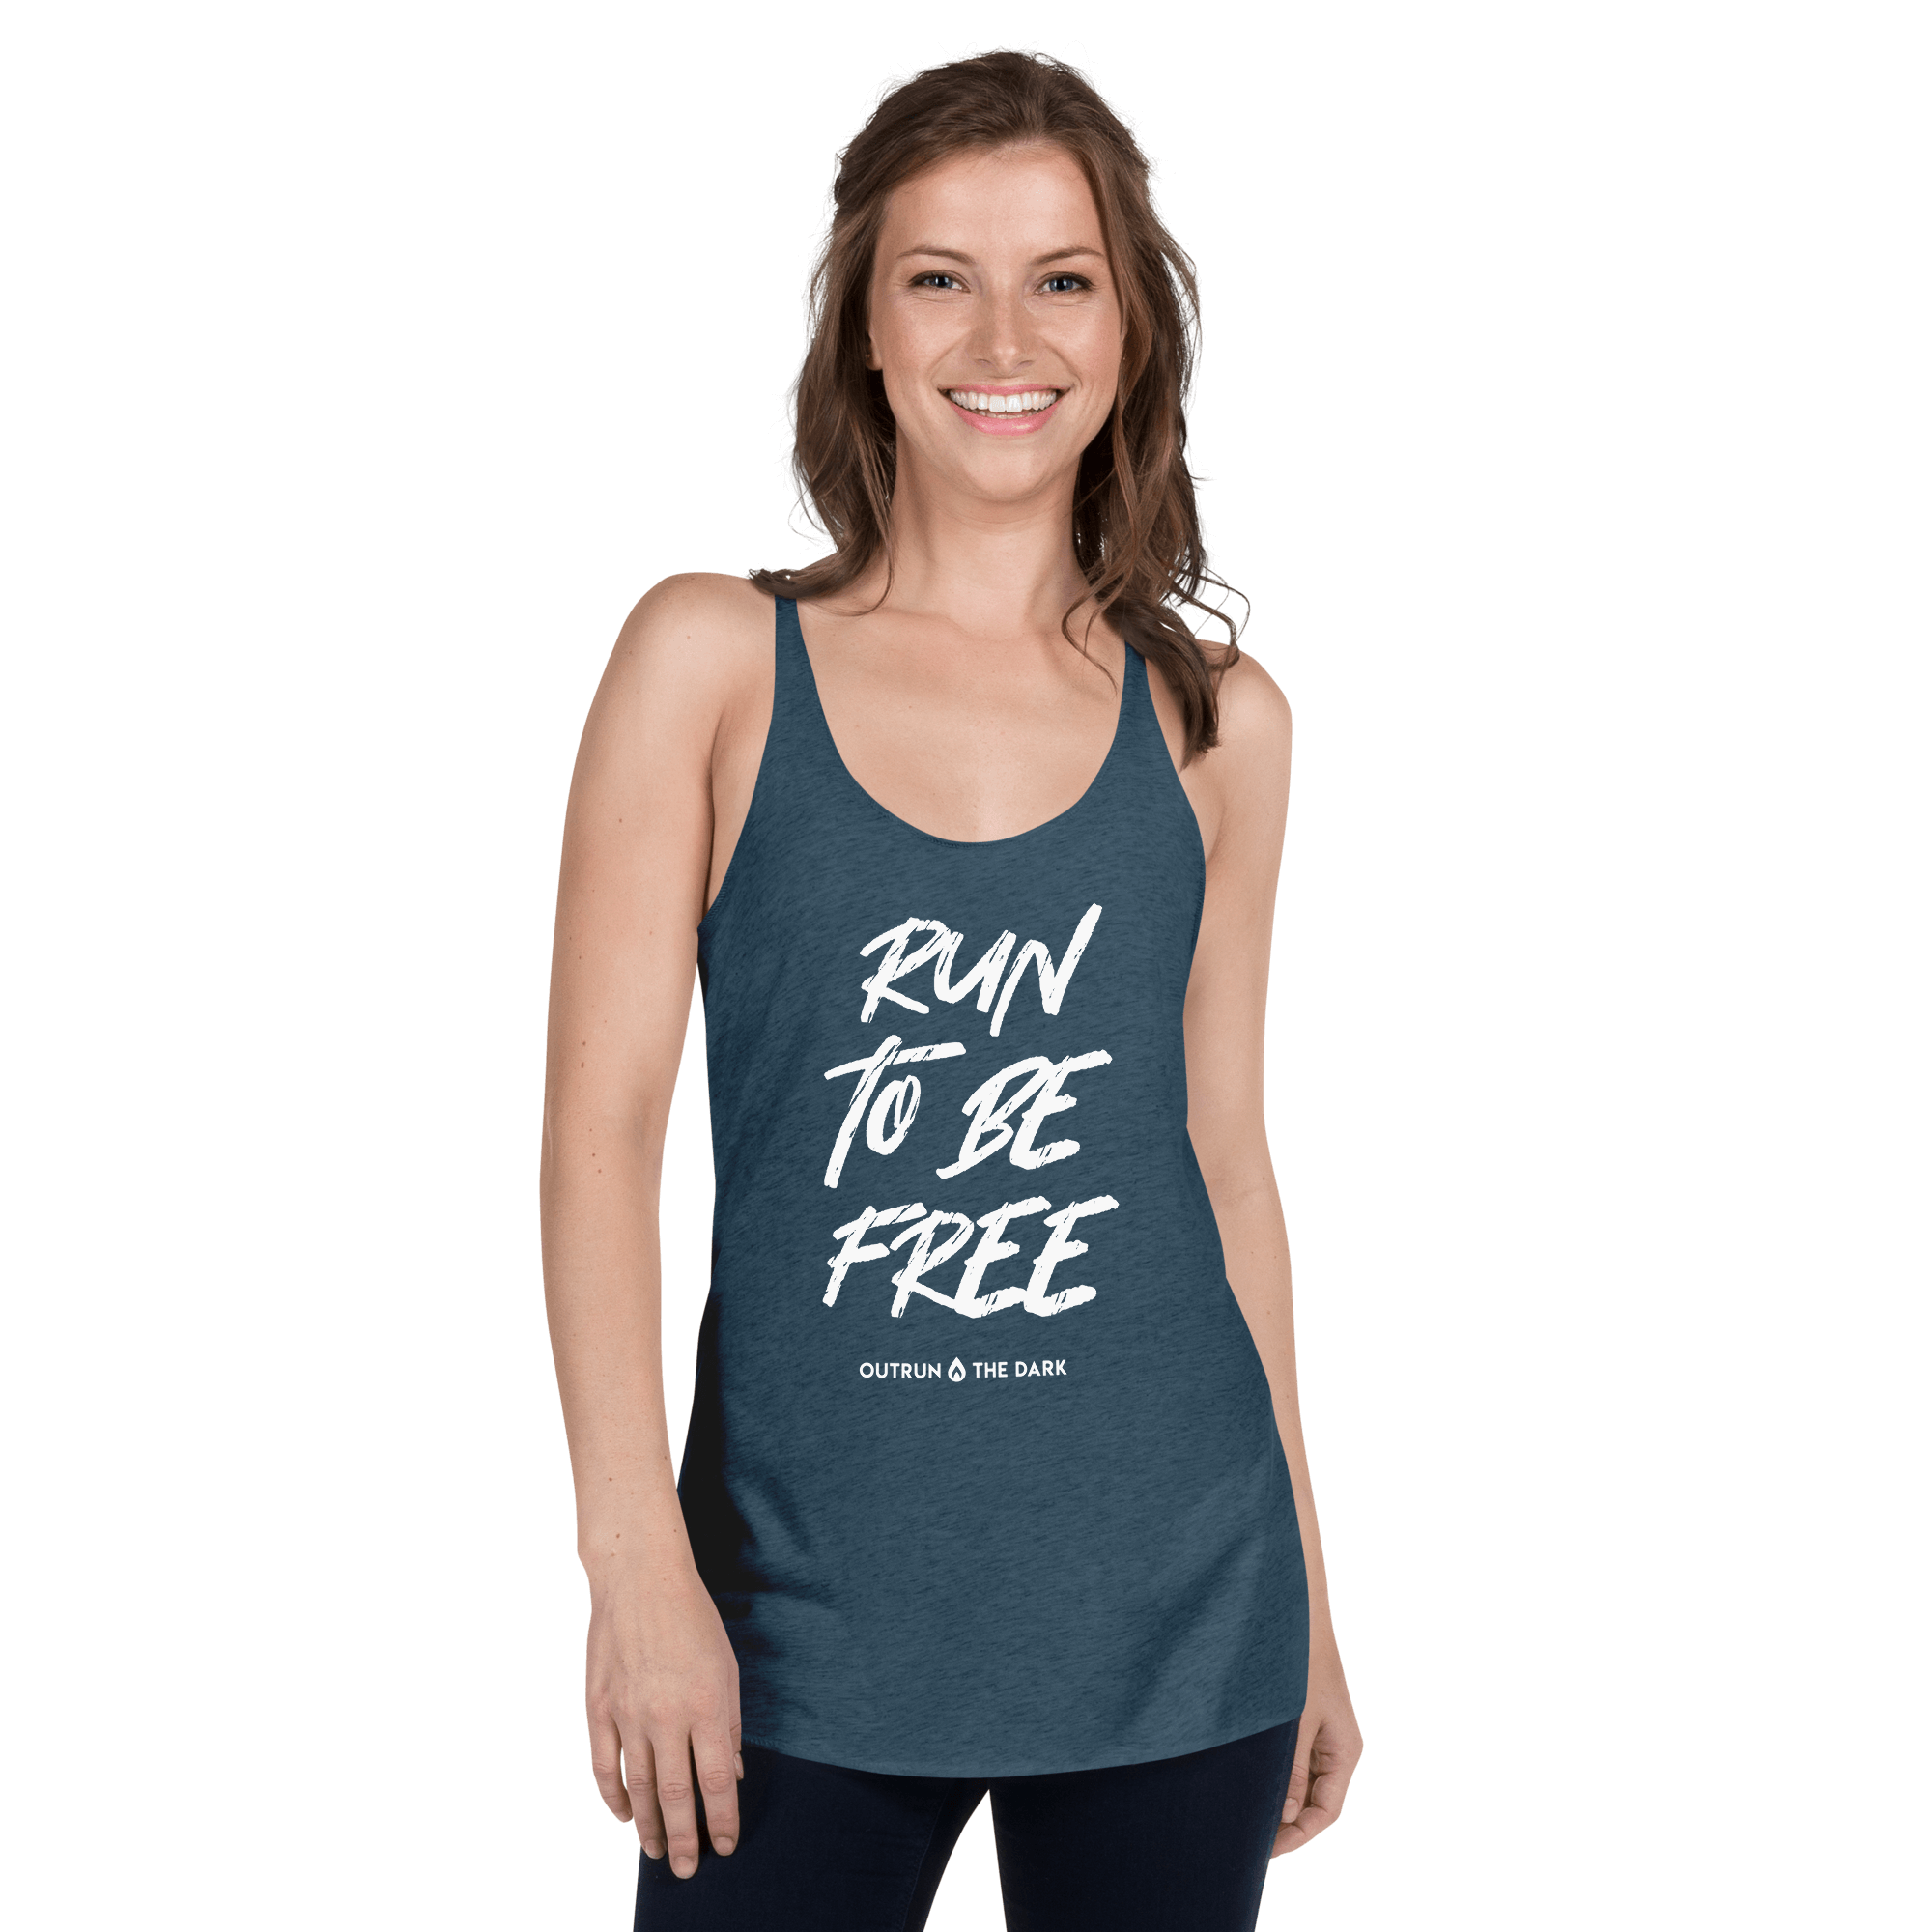 Run to be free Women's Racerback Tank